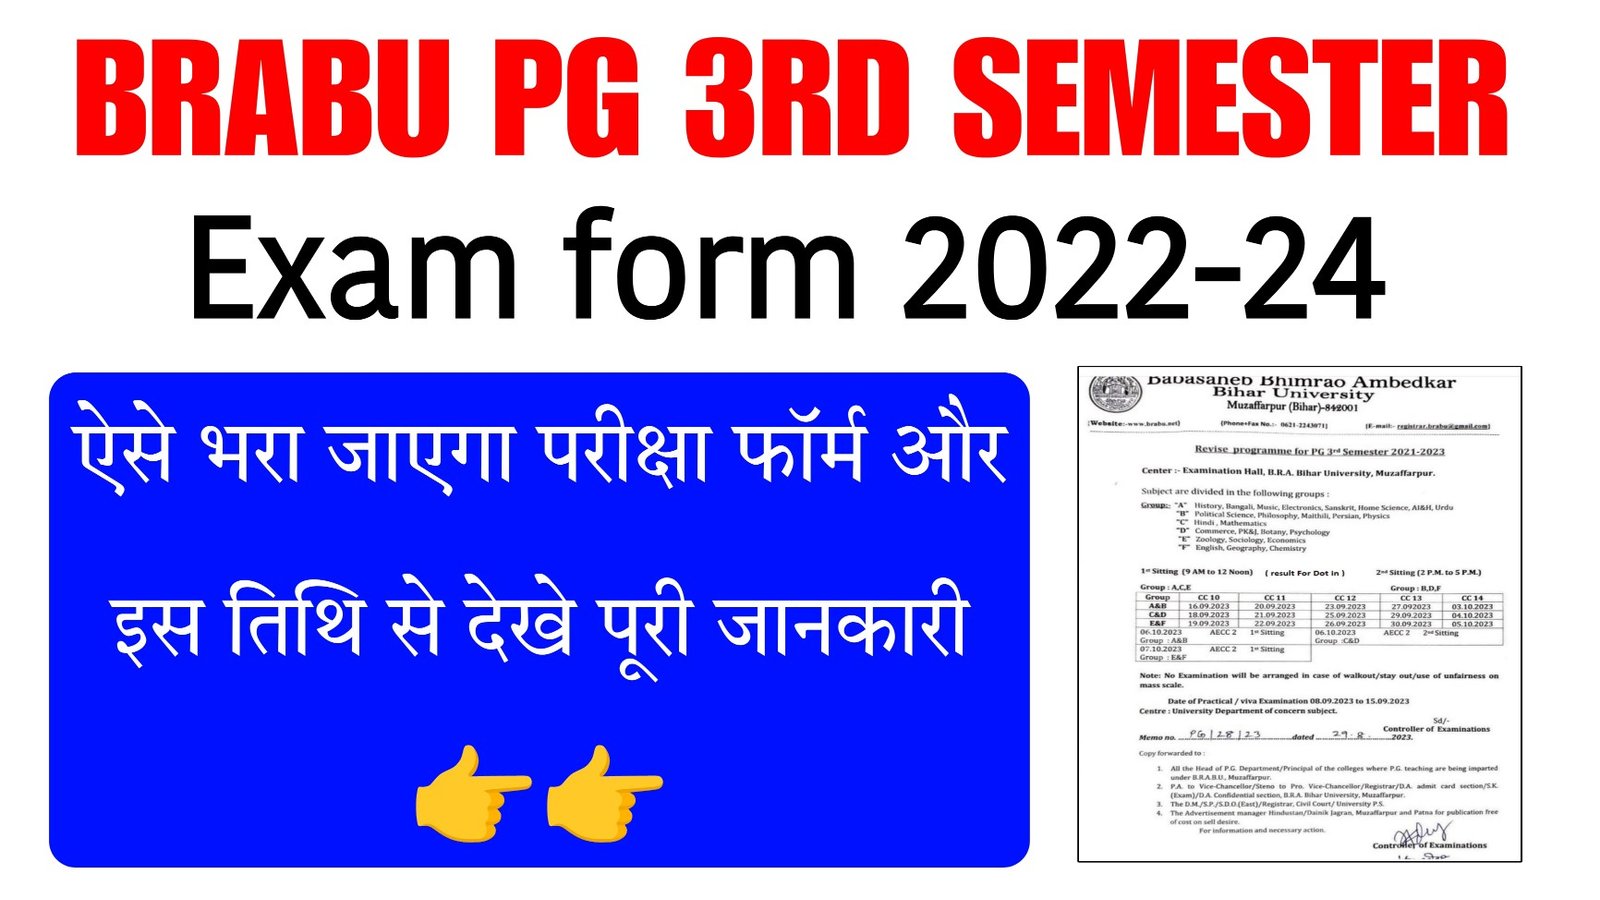 BRABU PG 3rd Semester Exam Form 2022-24